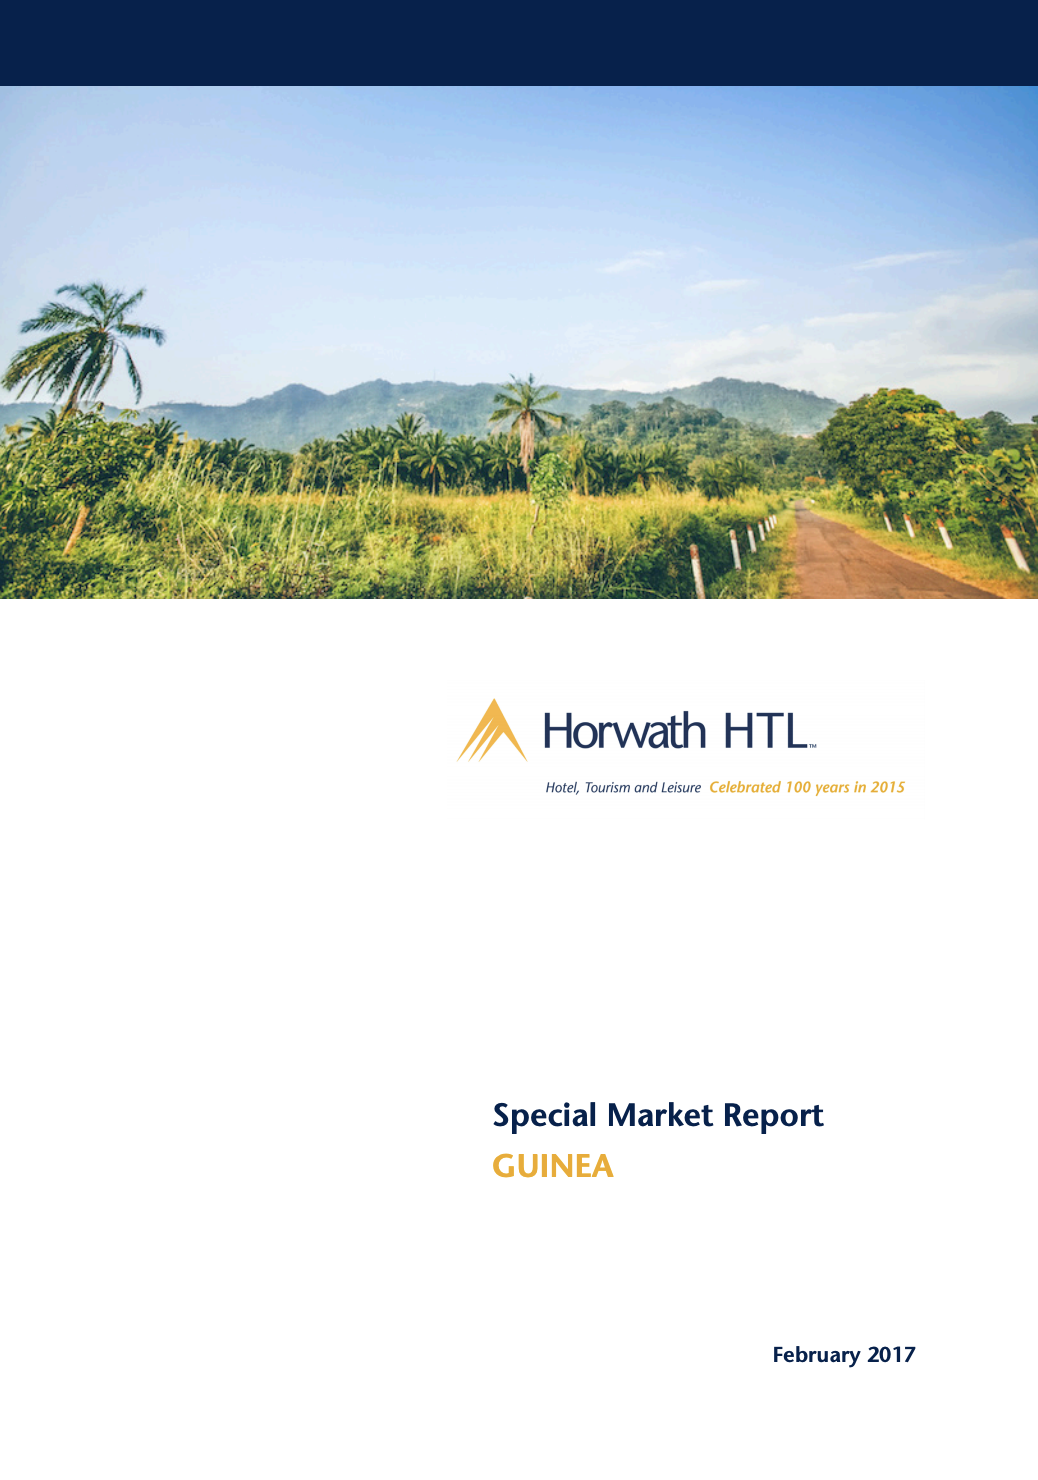 Market Report: Guinea